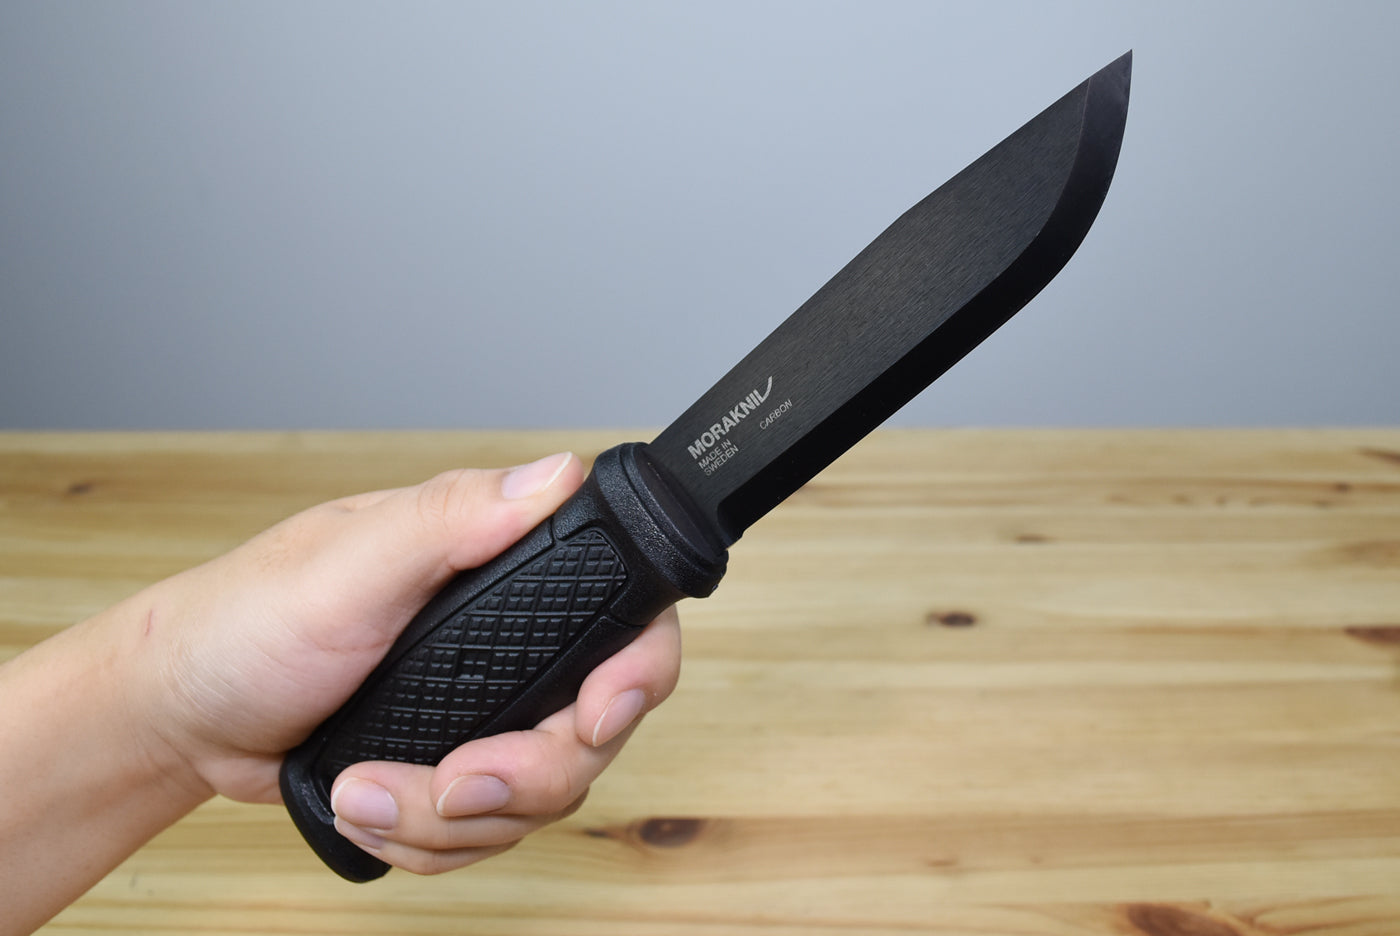 Morakniv Garberg Bushcraf knife Black C – Made for Adventure